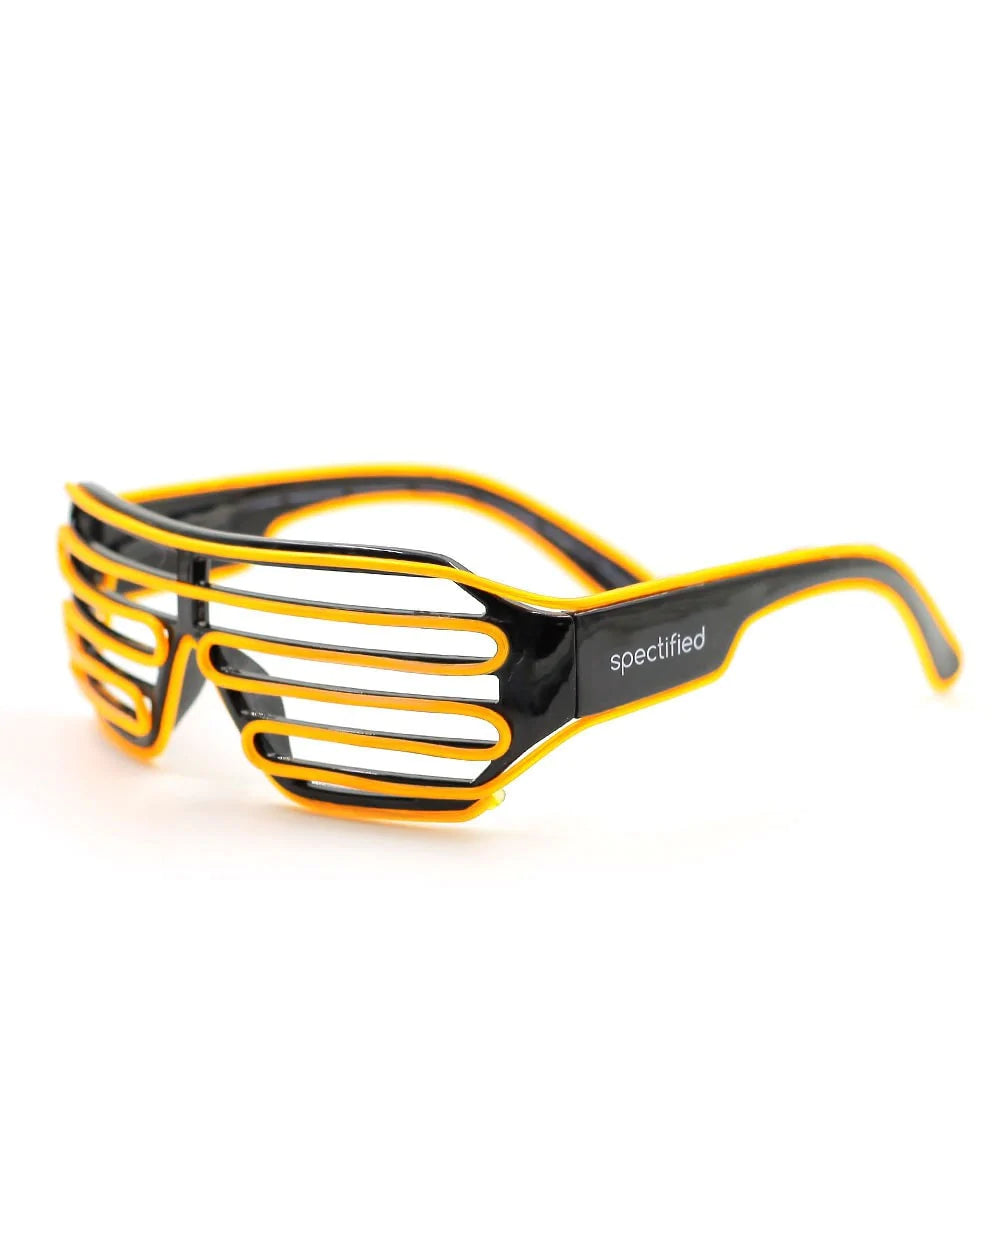 Black LED Shutter Glasses Side View - Yellow